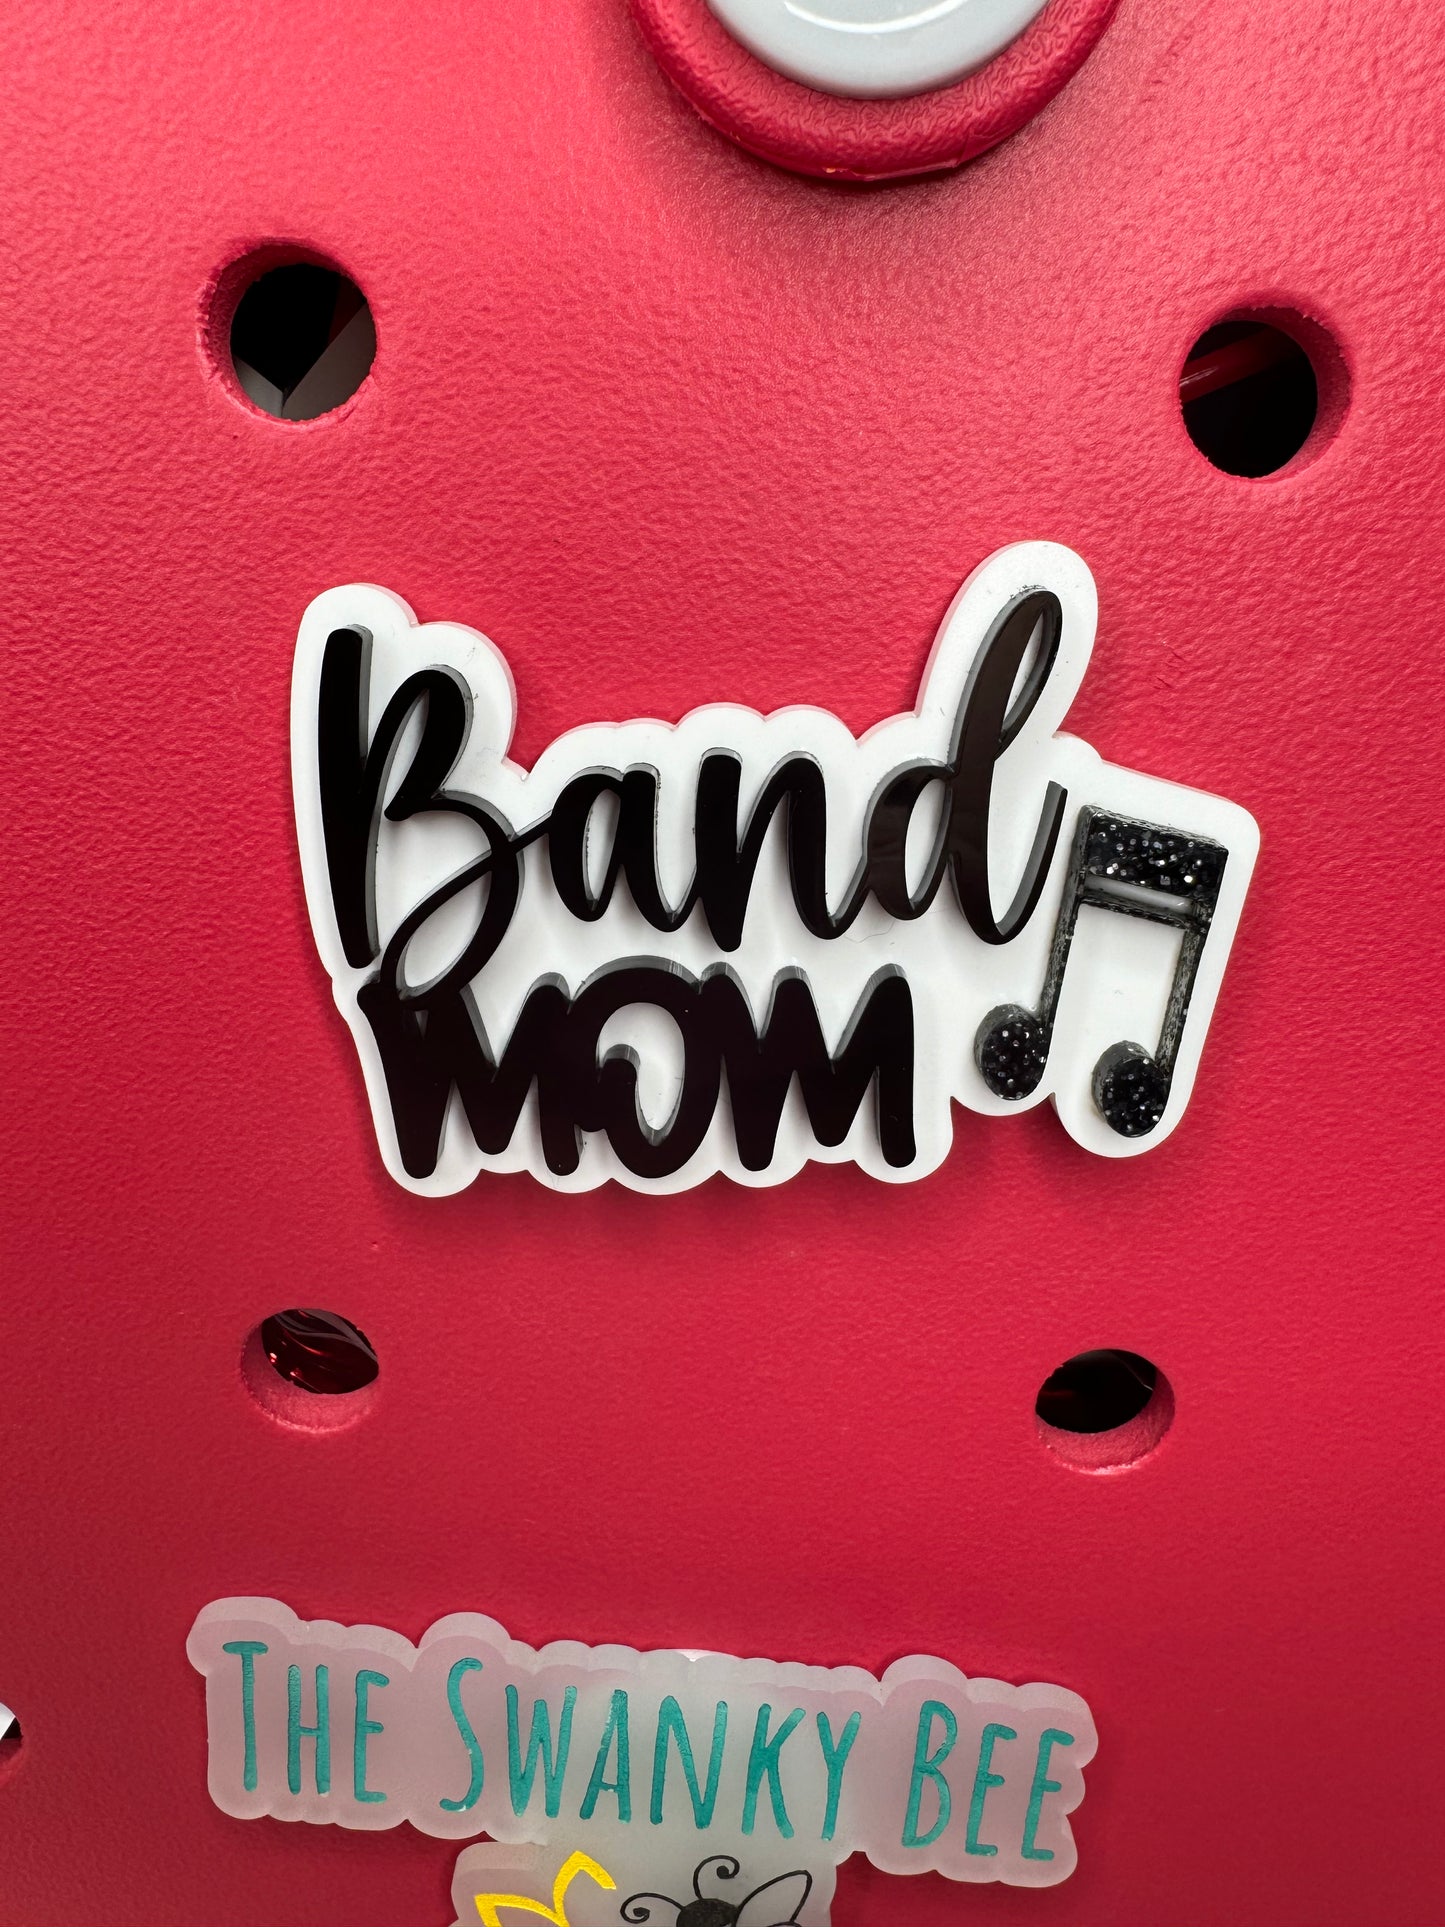 Band Mom Charm for Bogg Style Bags - Customizable Bag Charm - Band Mom Gift - Bogg Bag Accessory - Personalized Band Bag Charm